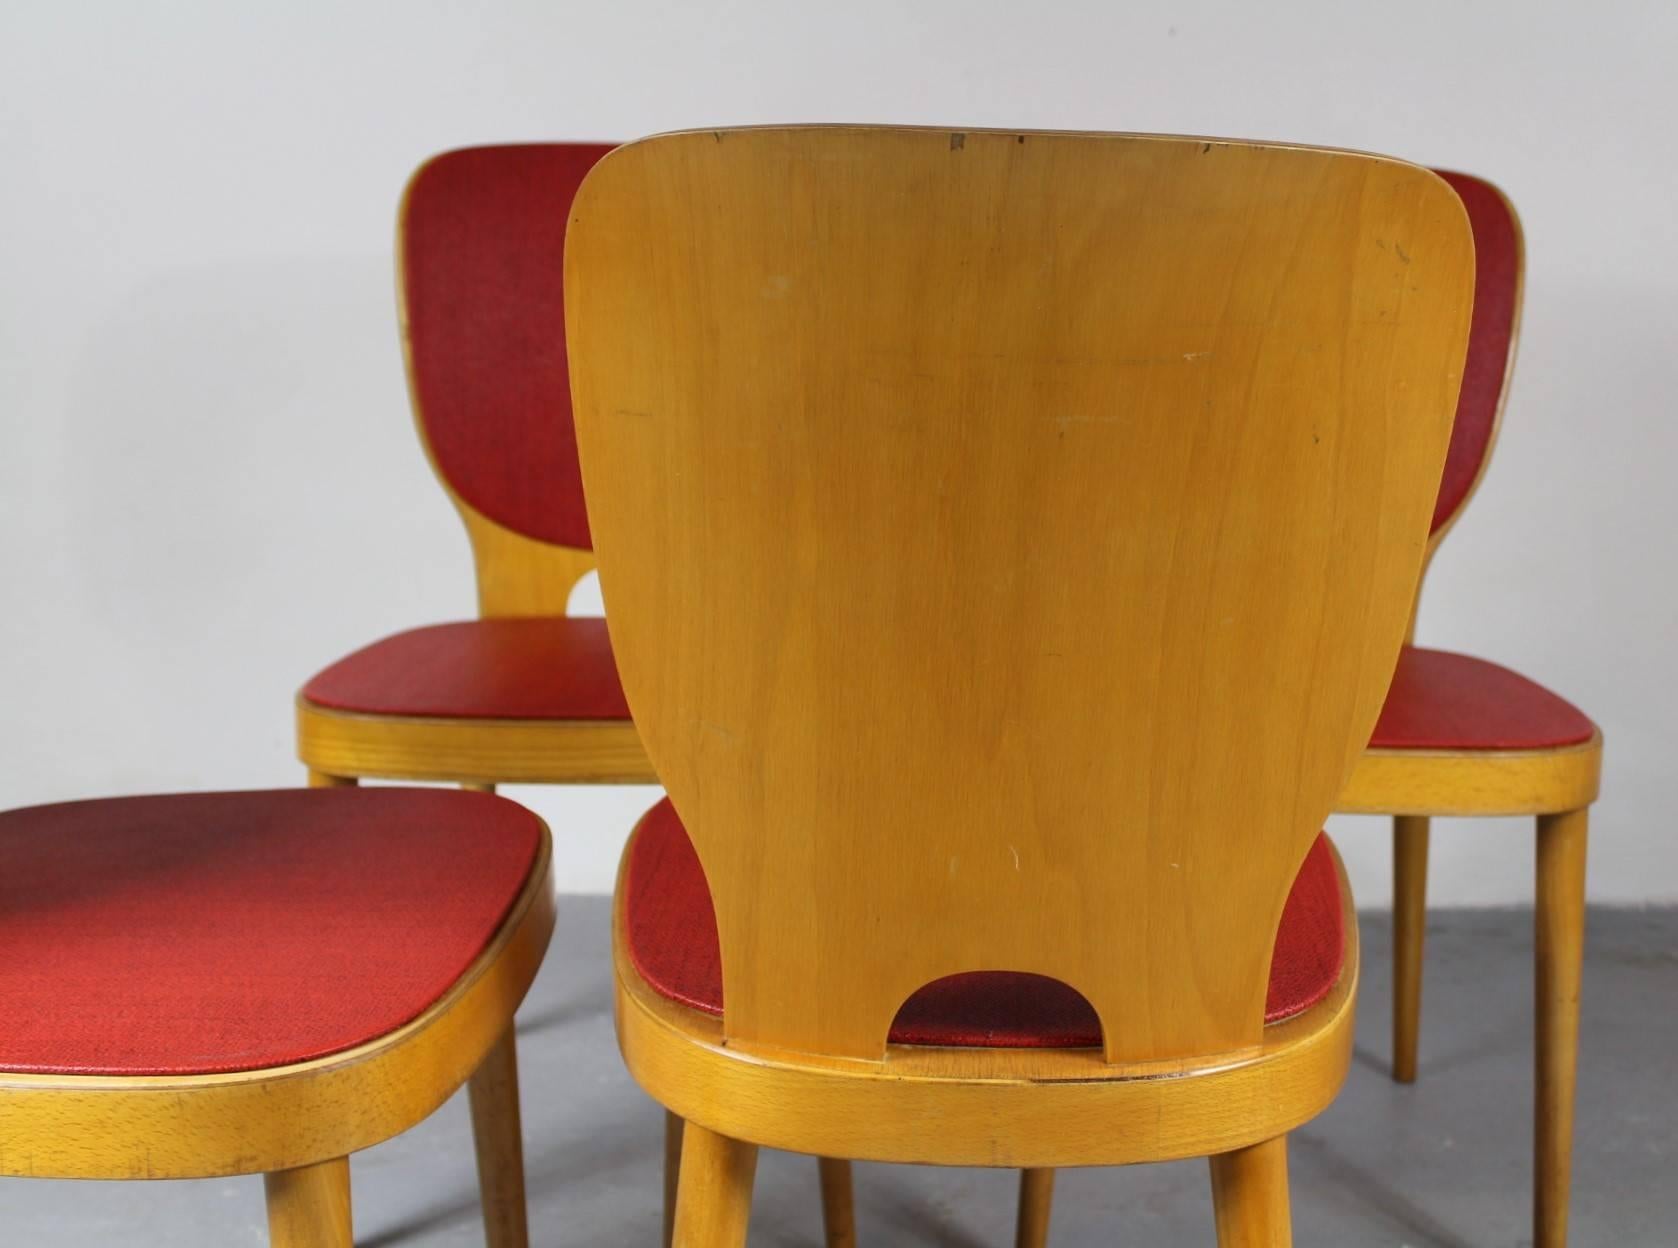 20th Century Max Bill, Set of Four Chairs Manufactured by Horgen Glarus, Switzerland 1952